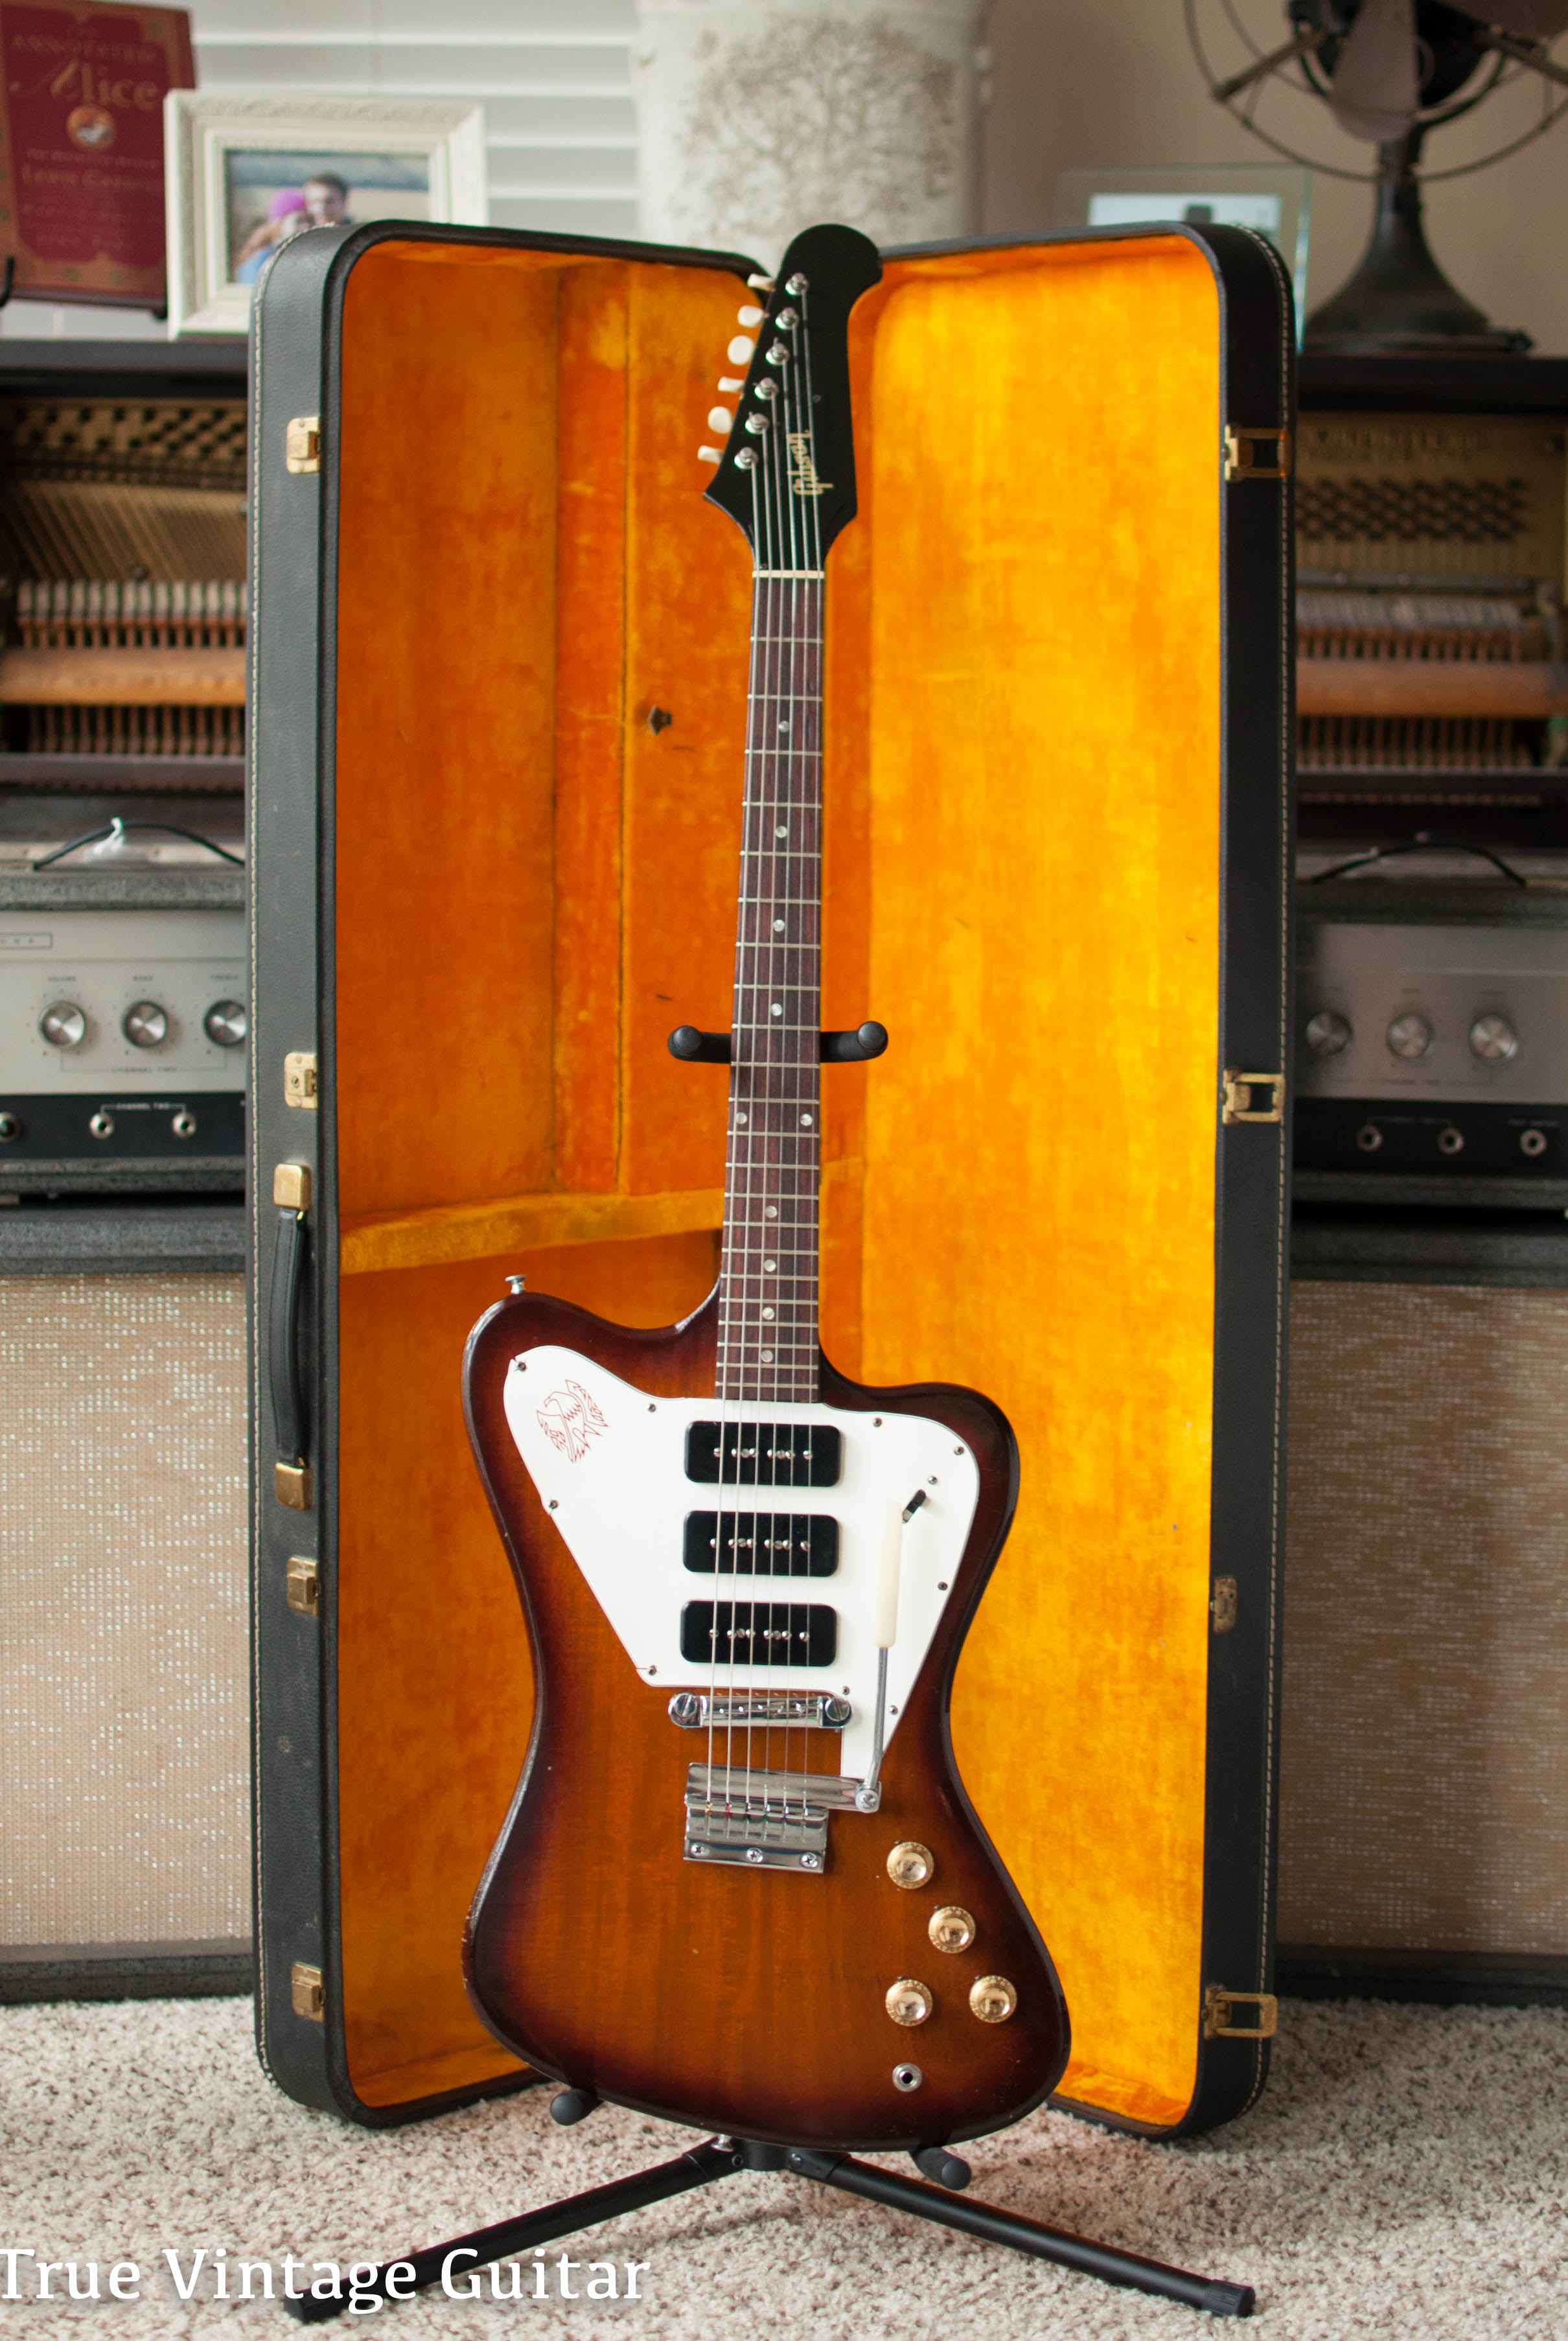 Vintage 1966 Gibson Firebird III electric guitar